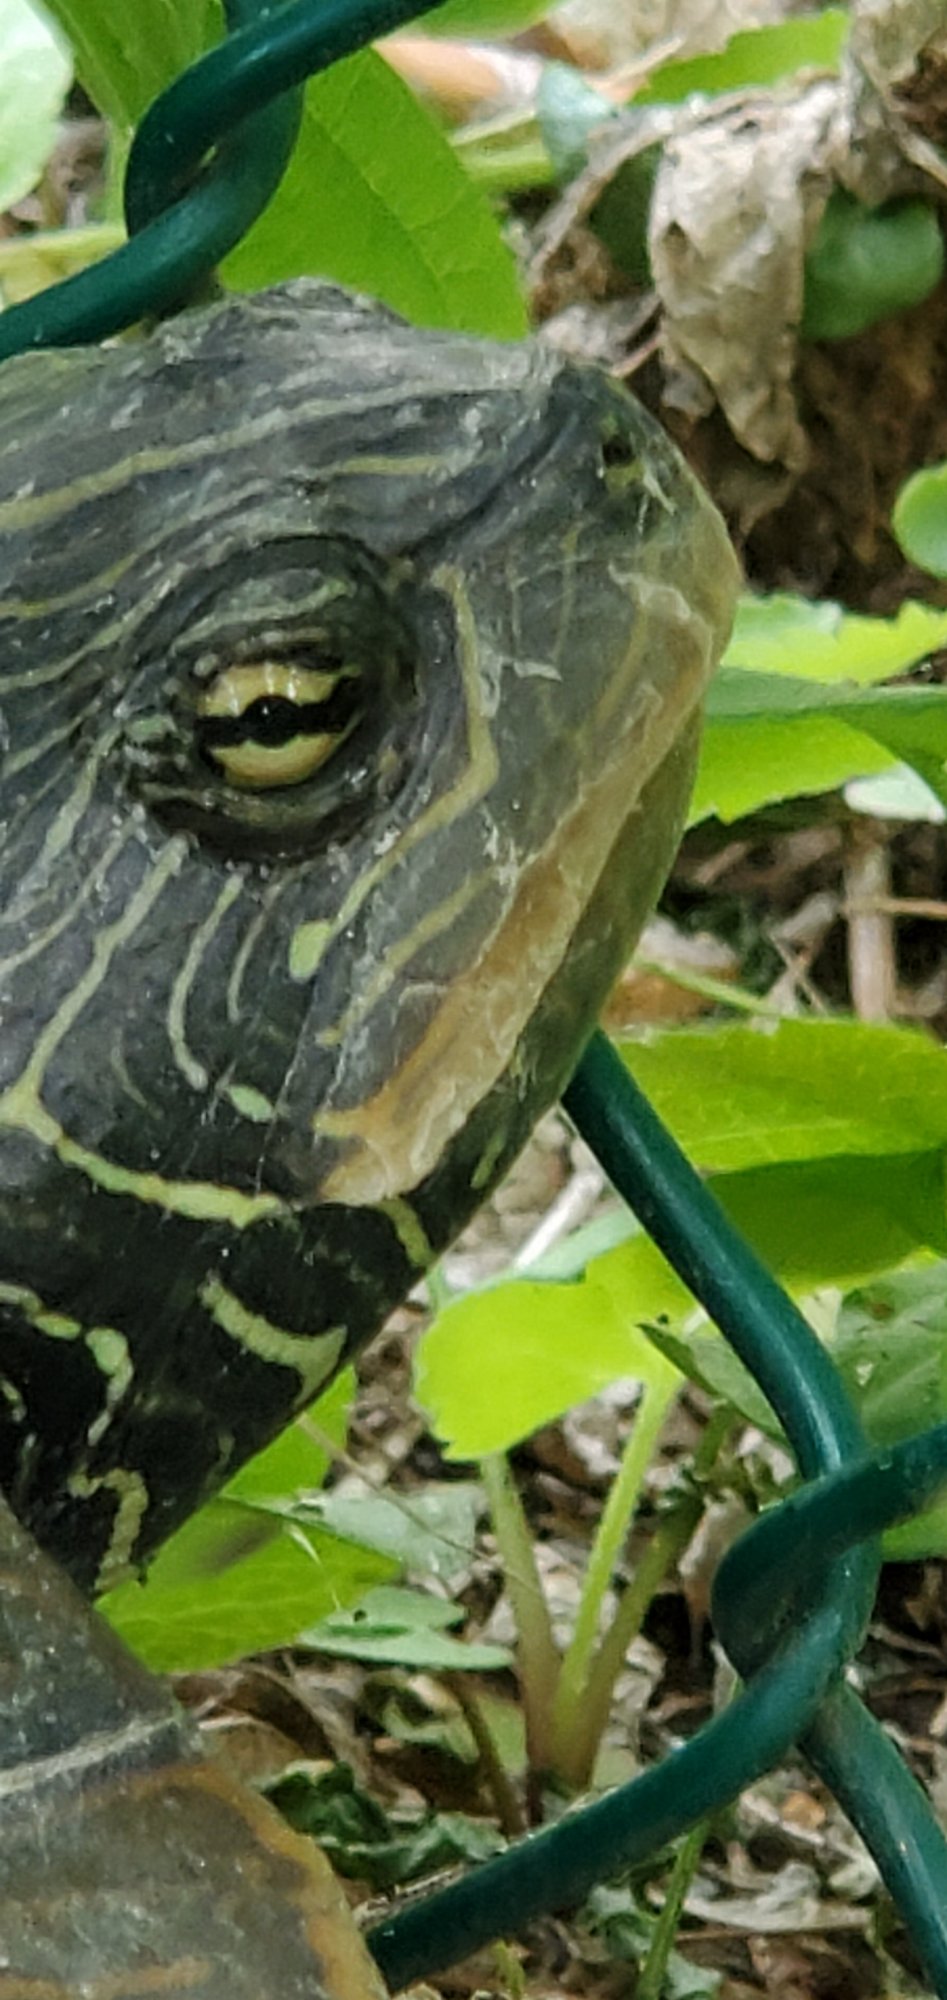 Turtle buddy